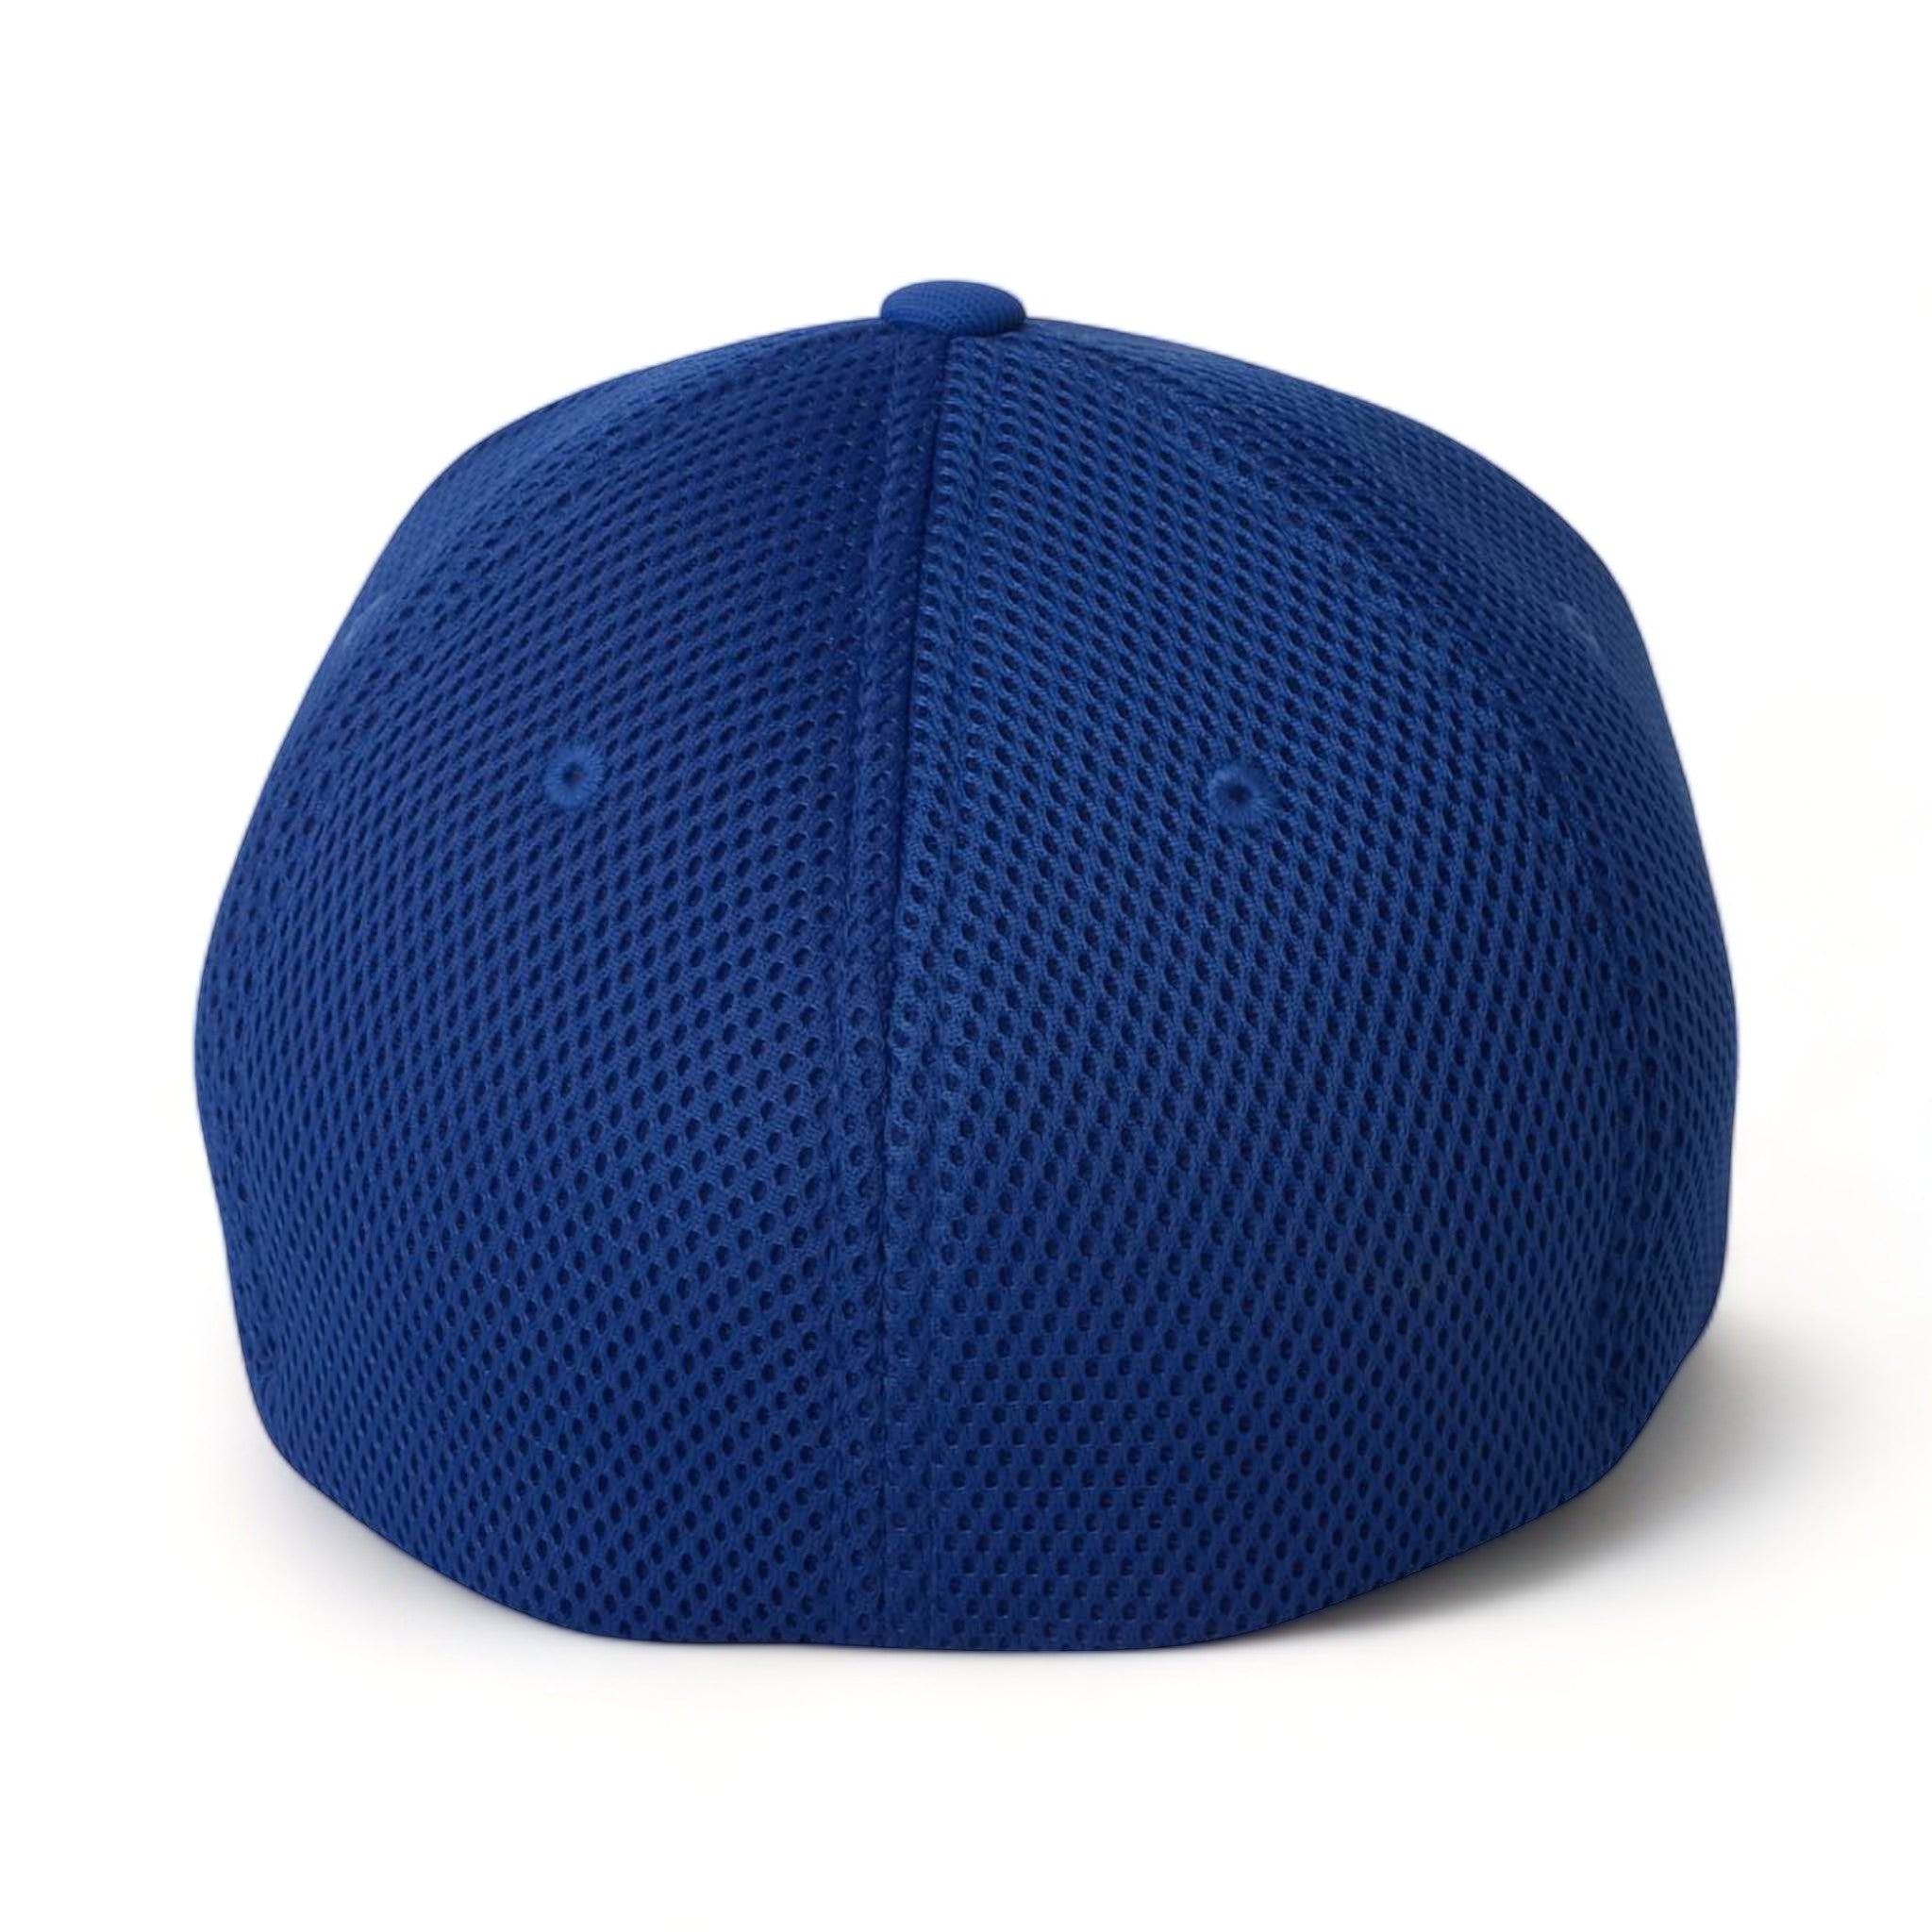 Back view of Flexfit 6533 custom hat in royal blue